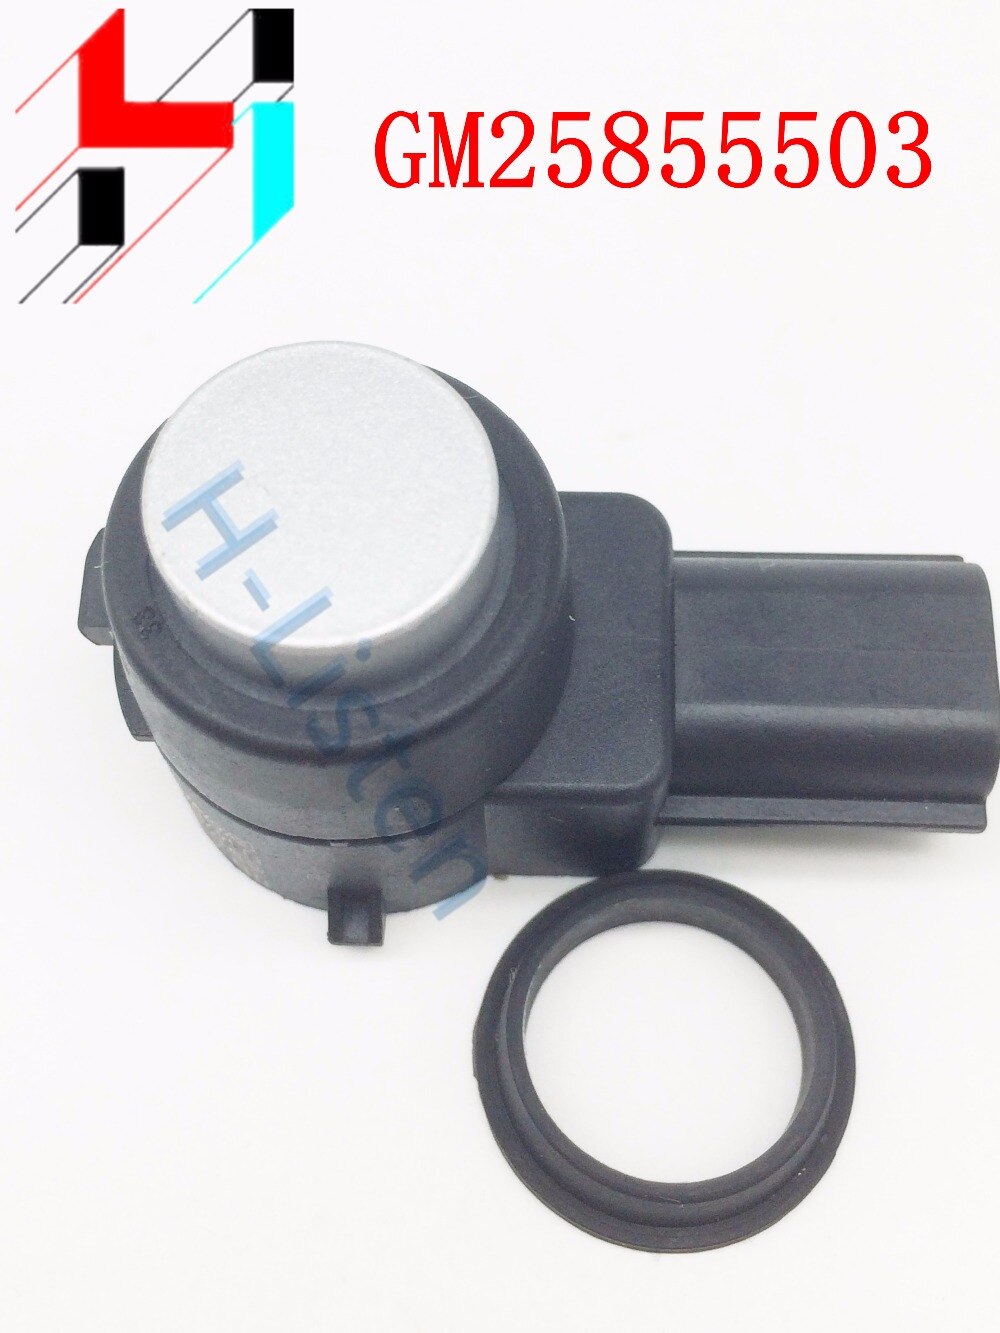 (4 STUKS) 25855503 100% Originele Parking PDC Ultrasone Sensor Reverse Assist voor GM Cruze Opel Cadillac OE #0263003704